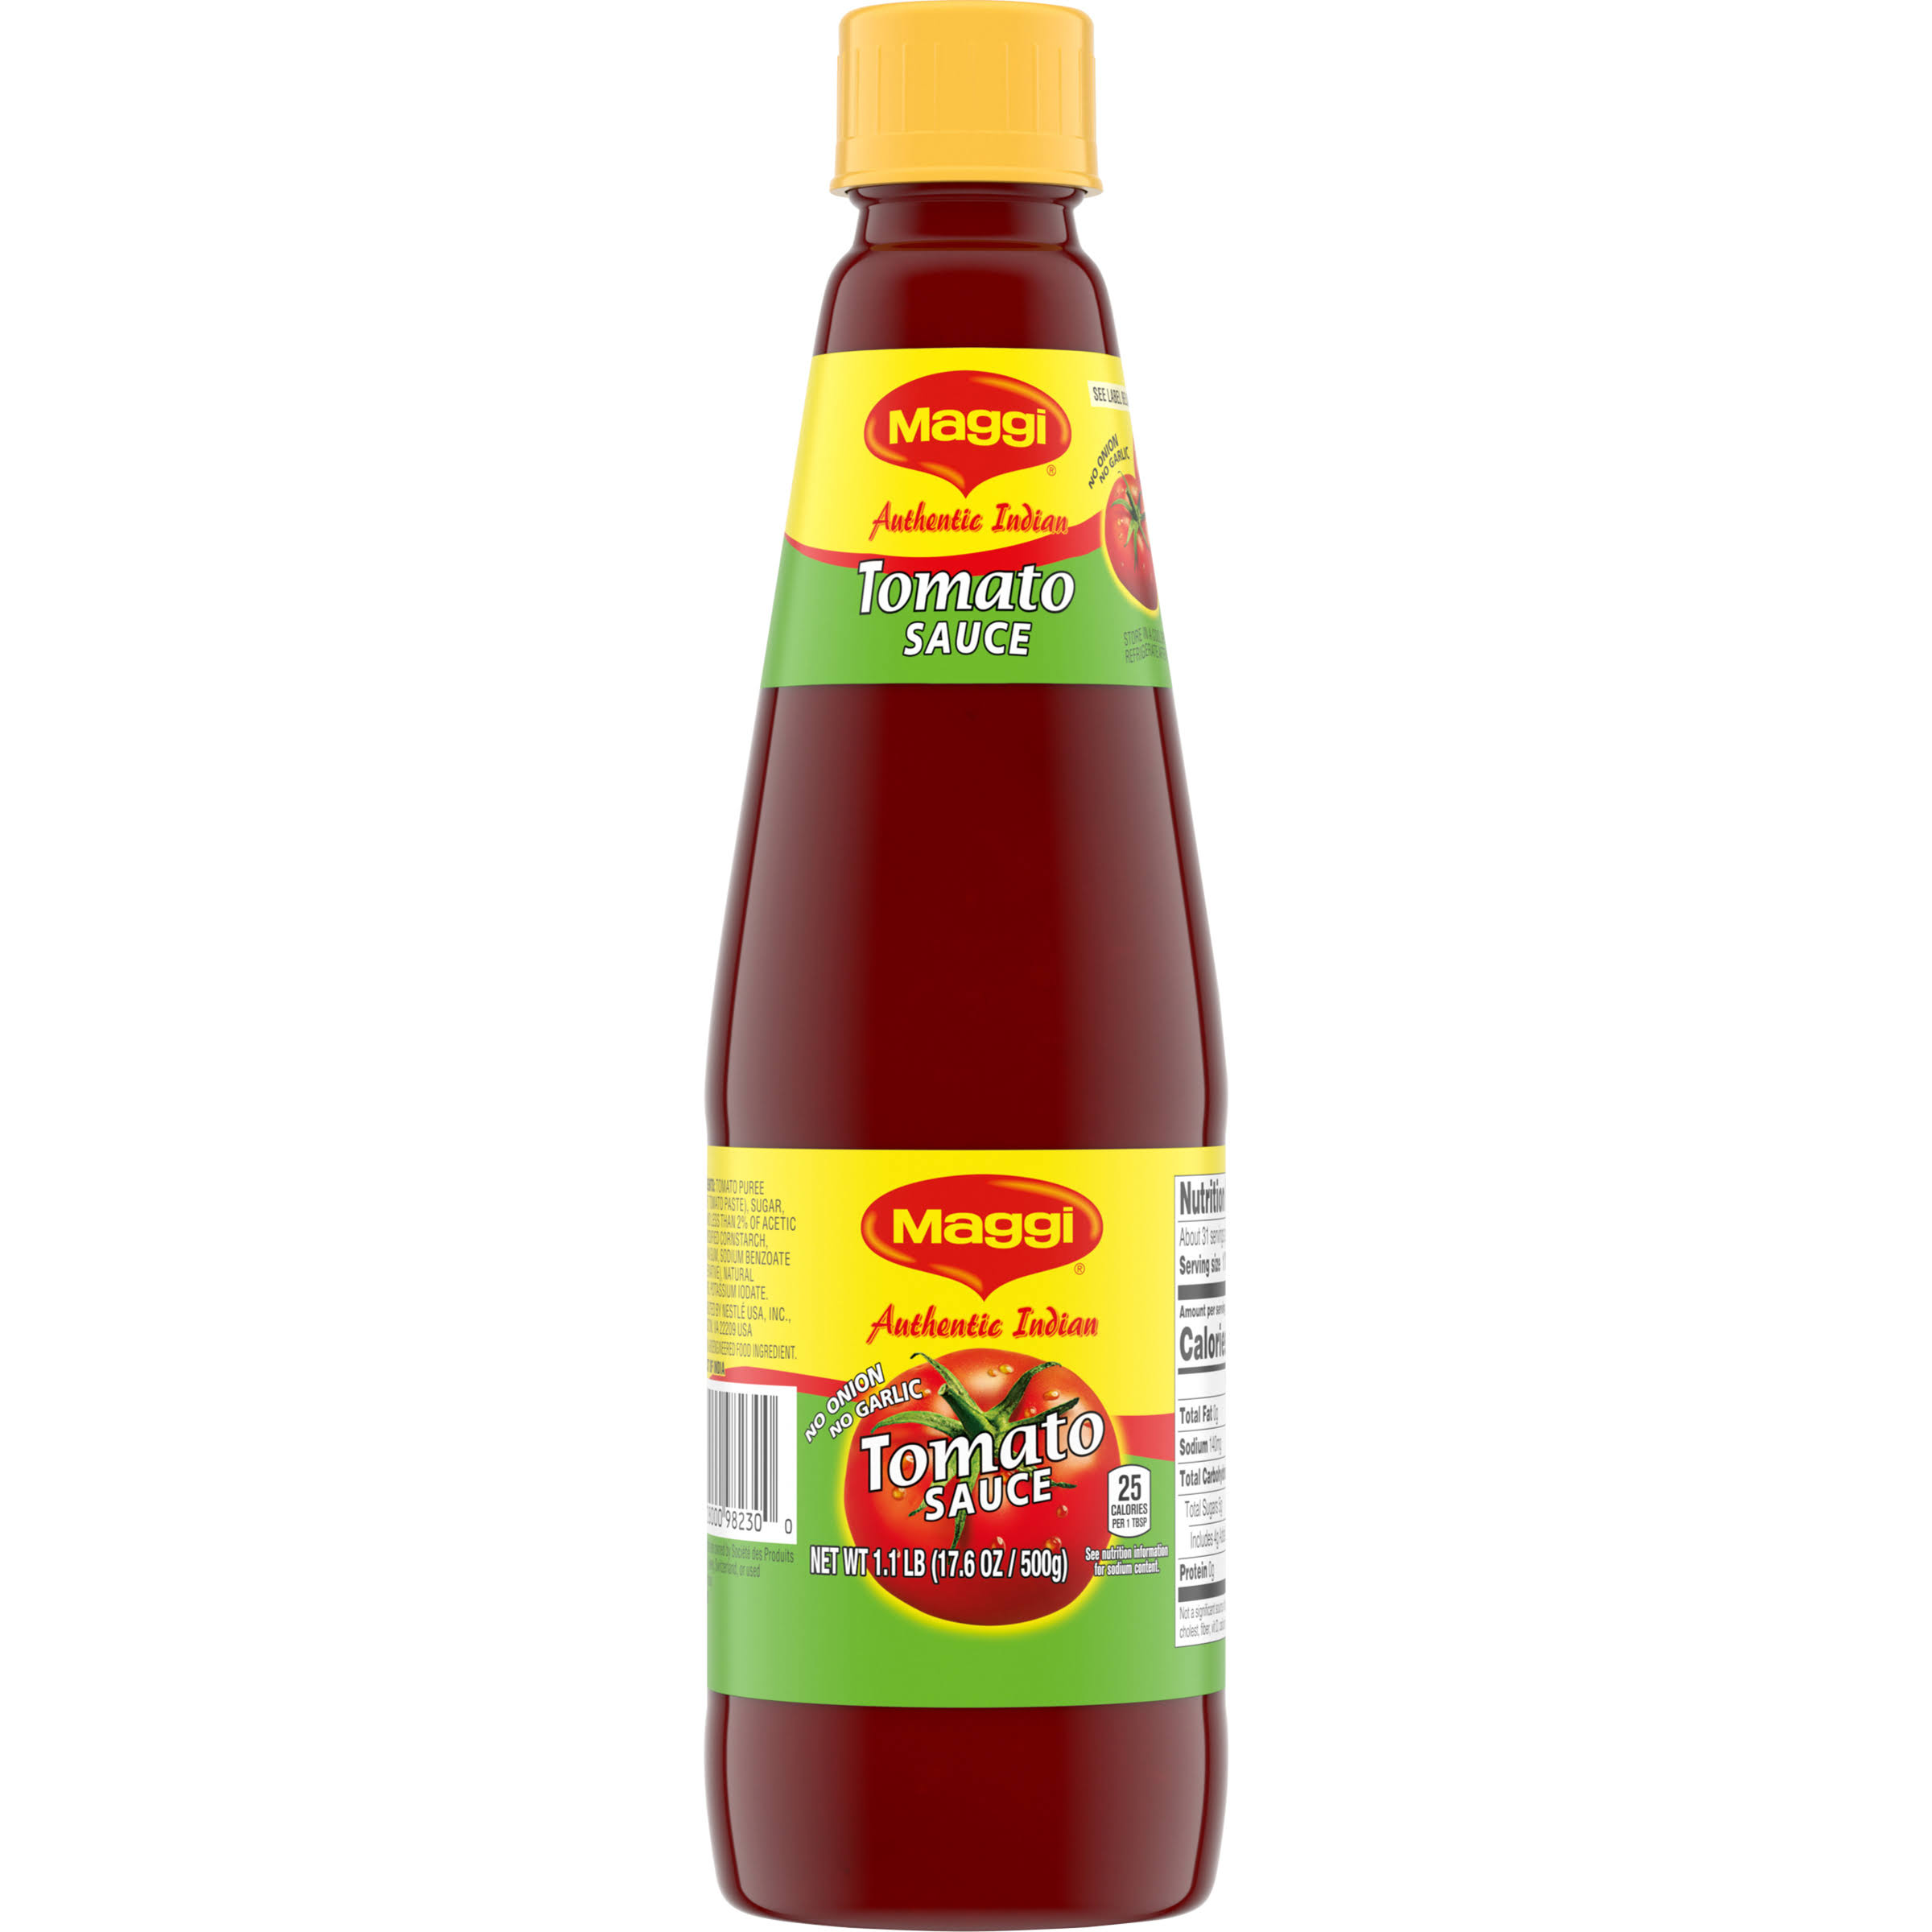 Maggi Tomato Sauce, Indian - 1.1 lb